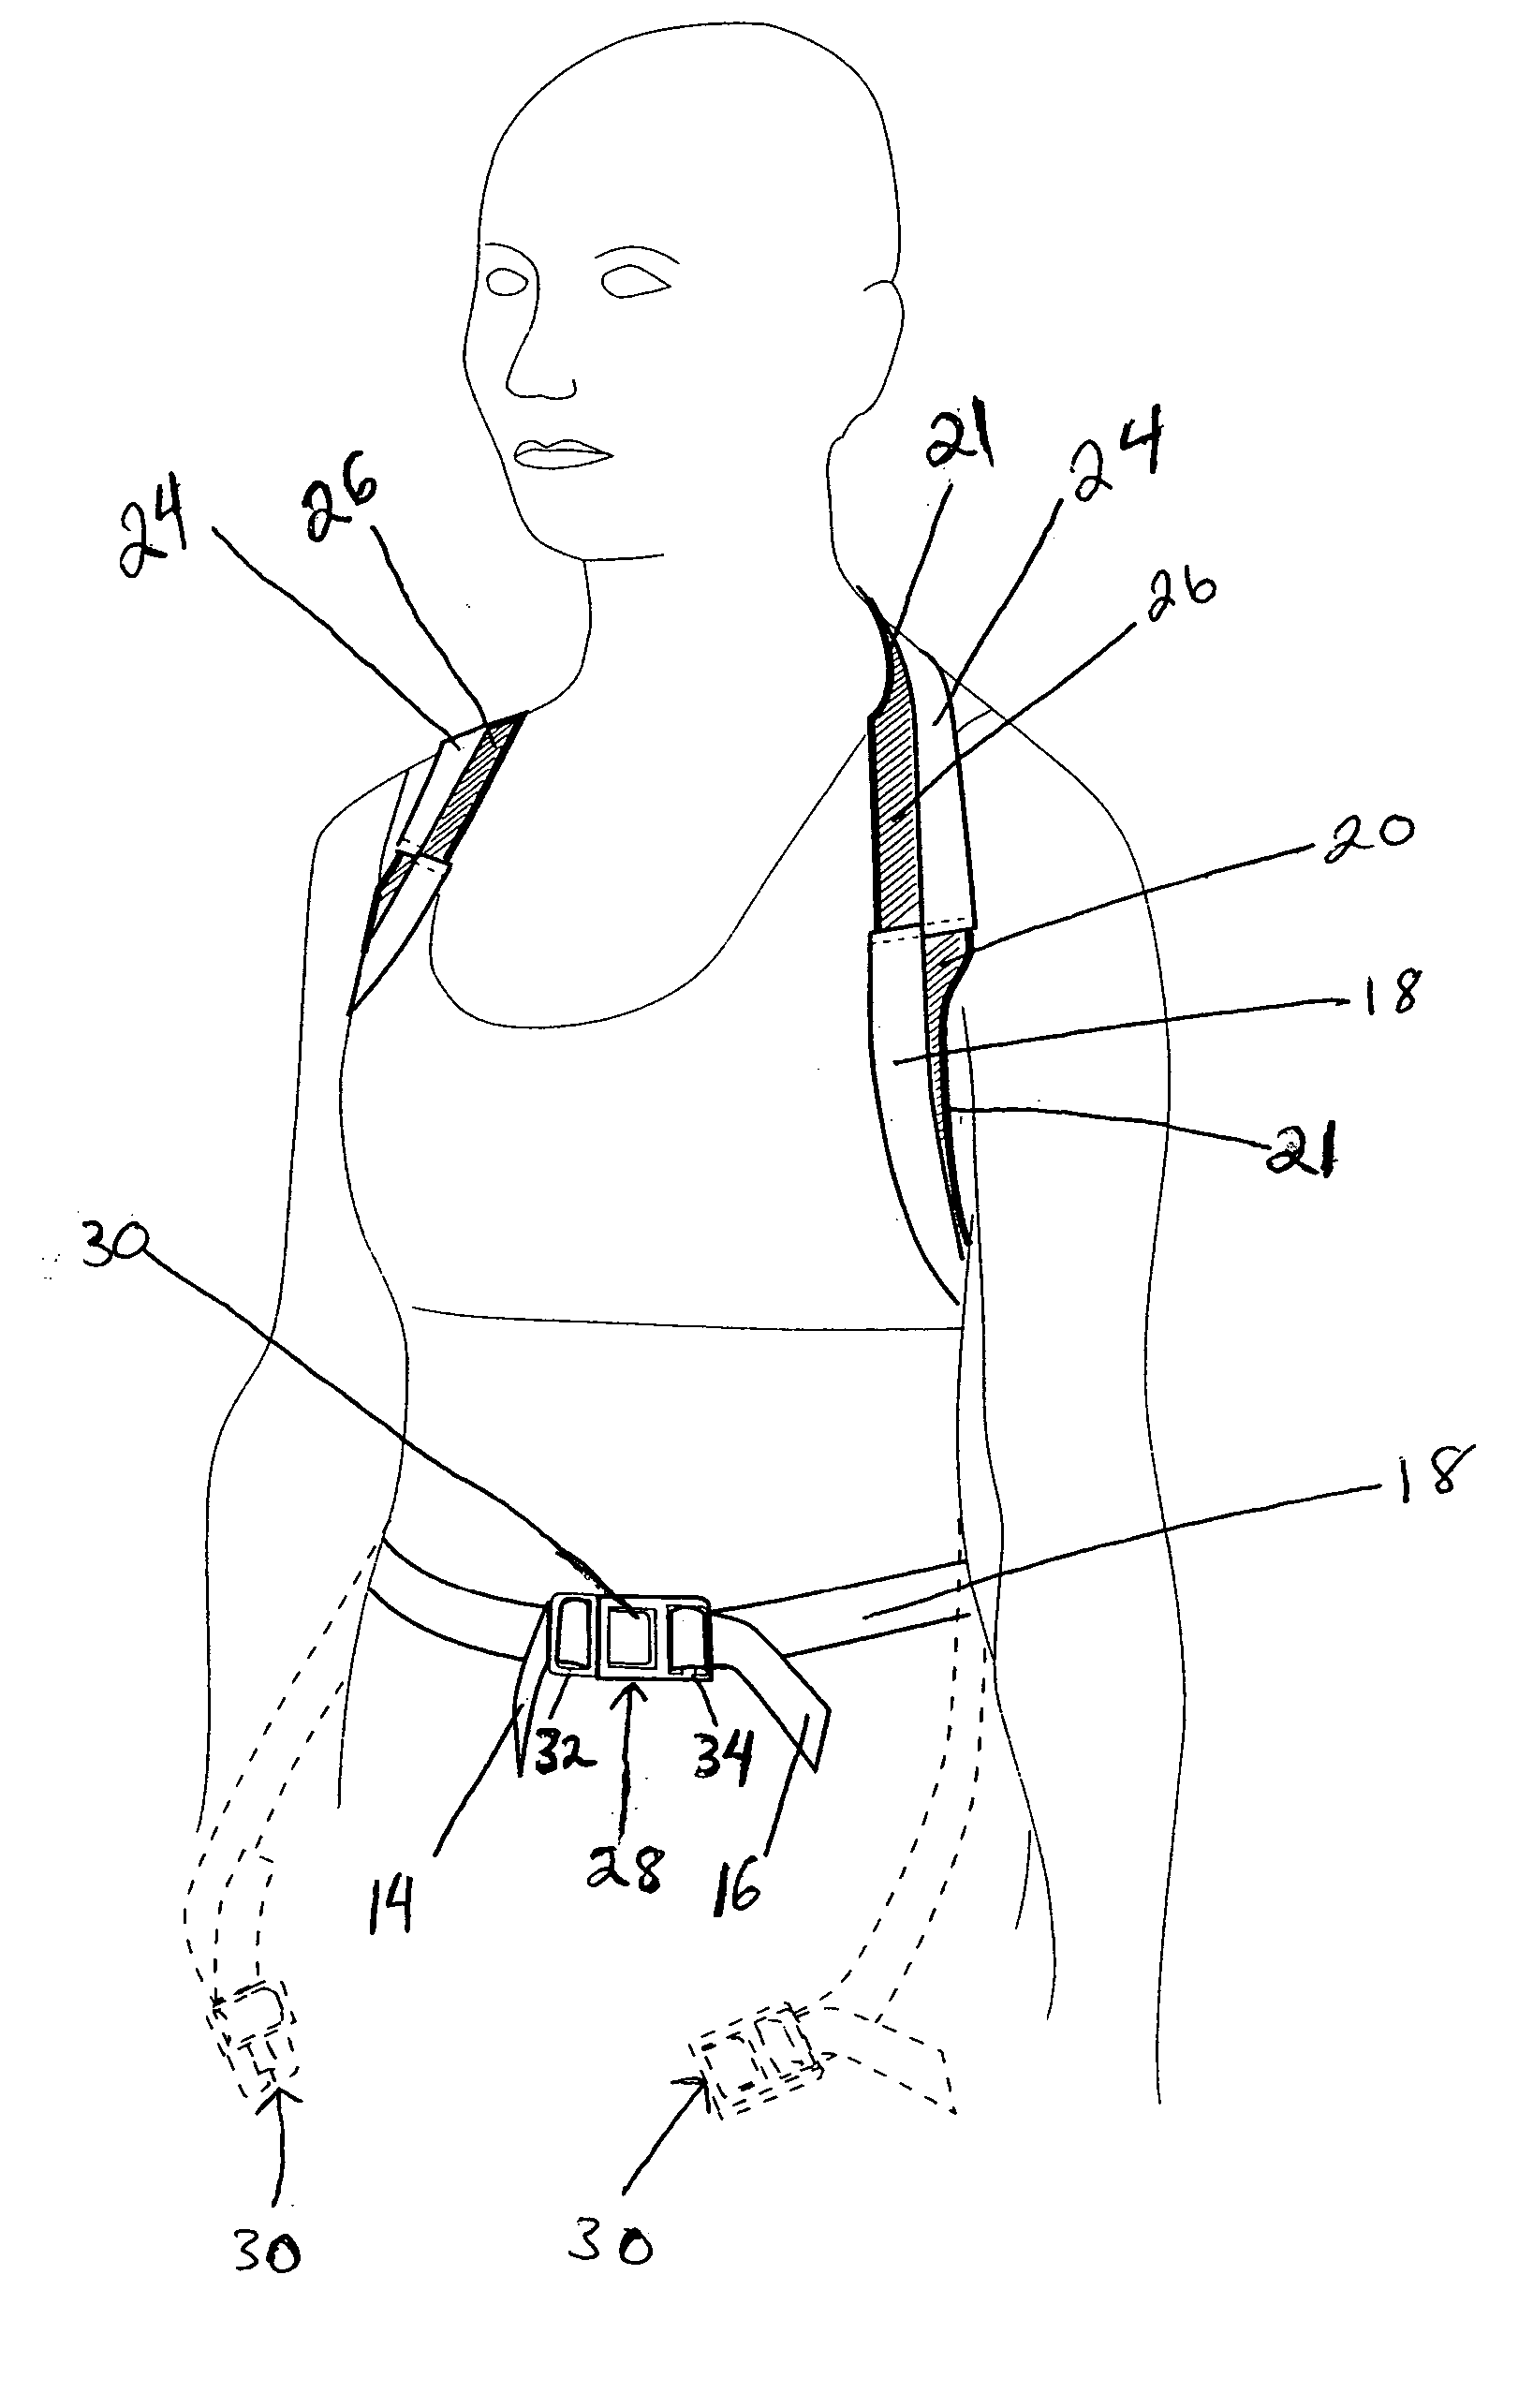 Posture band and method of improving posture